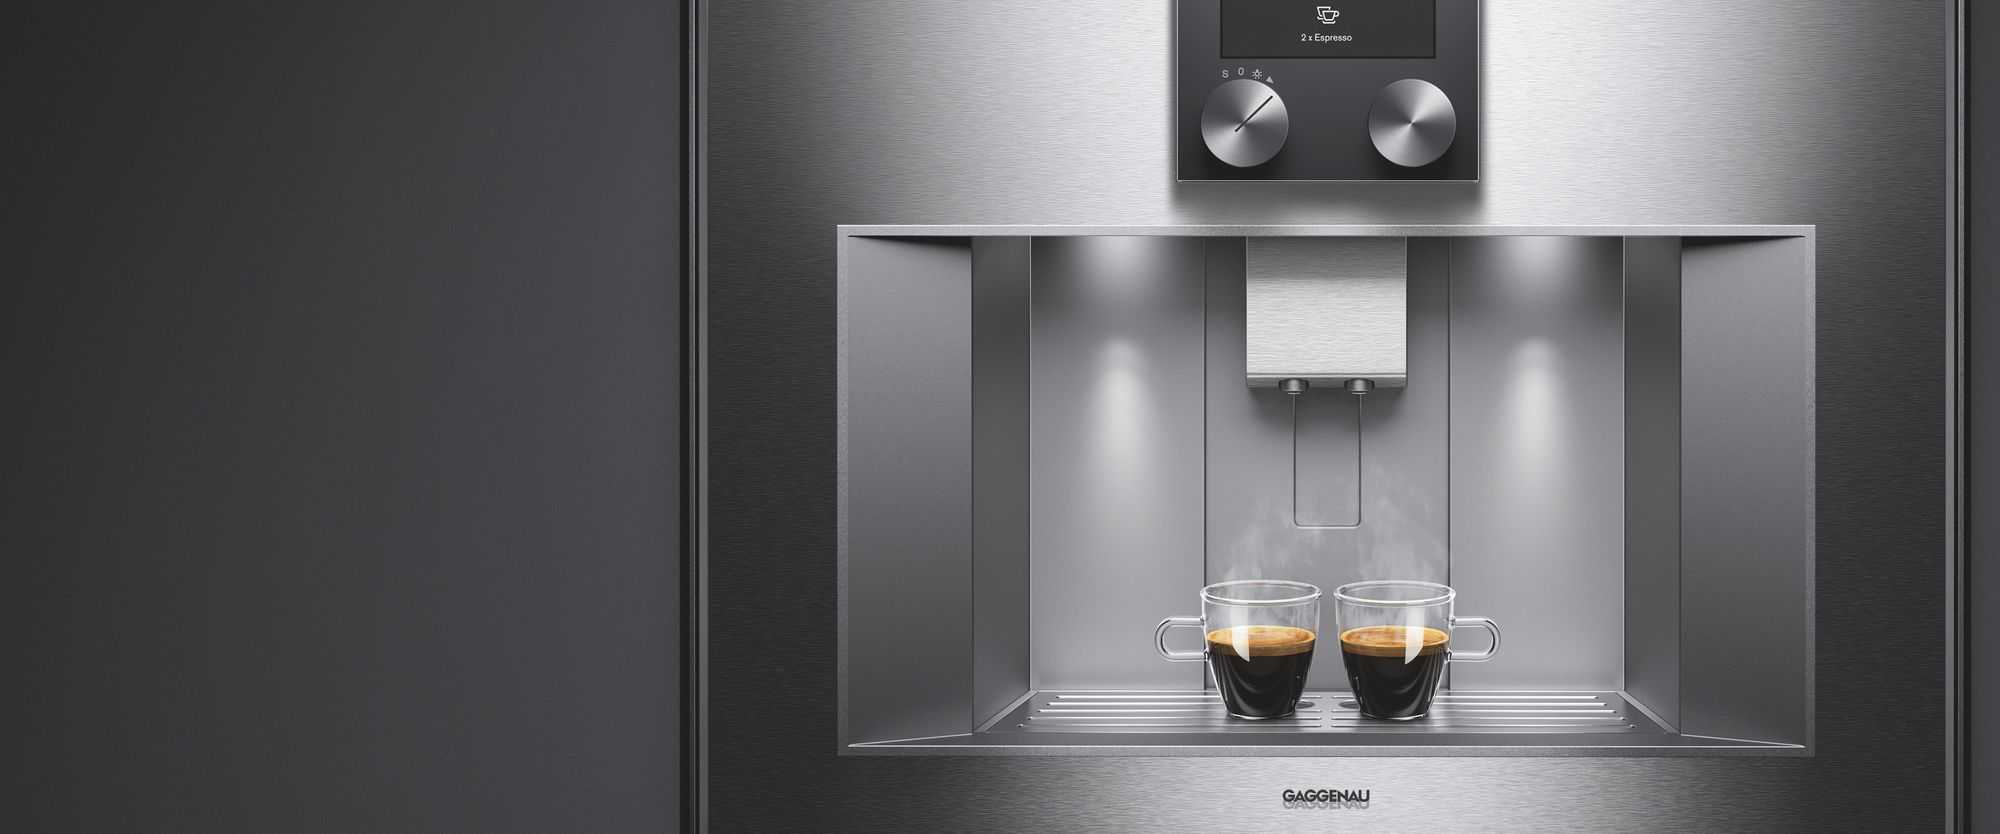 Gaggenau 400 Series Coffee Machines by FCI London